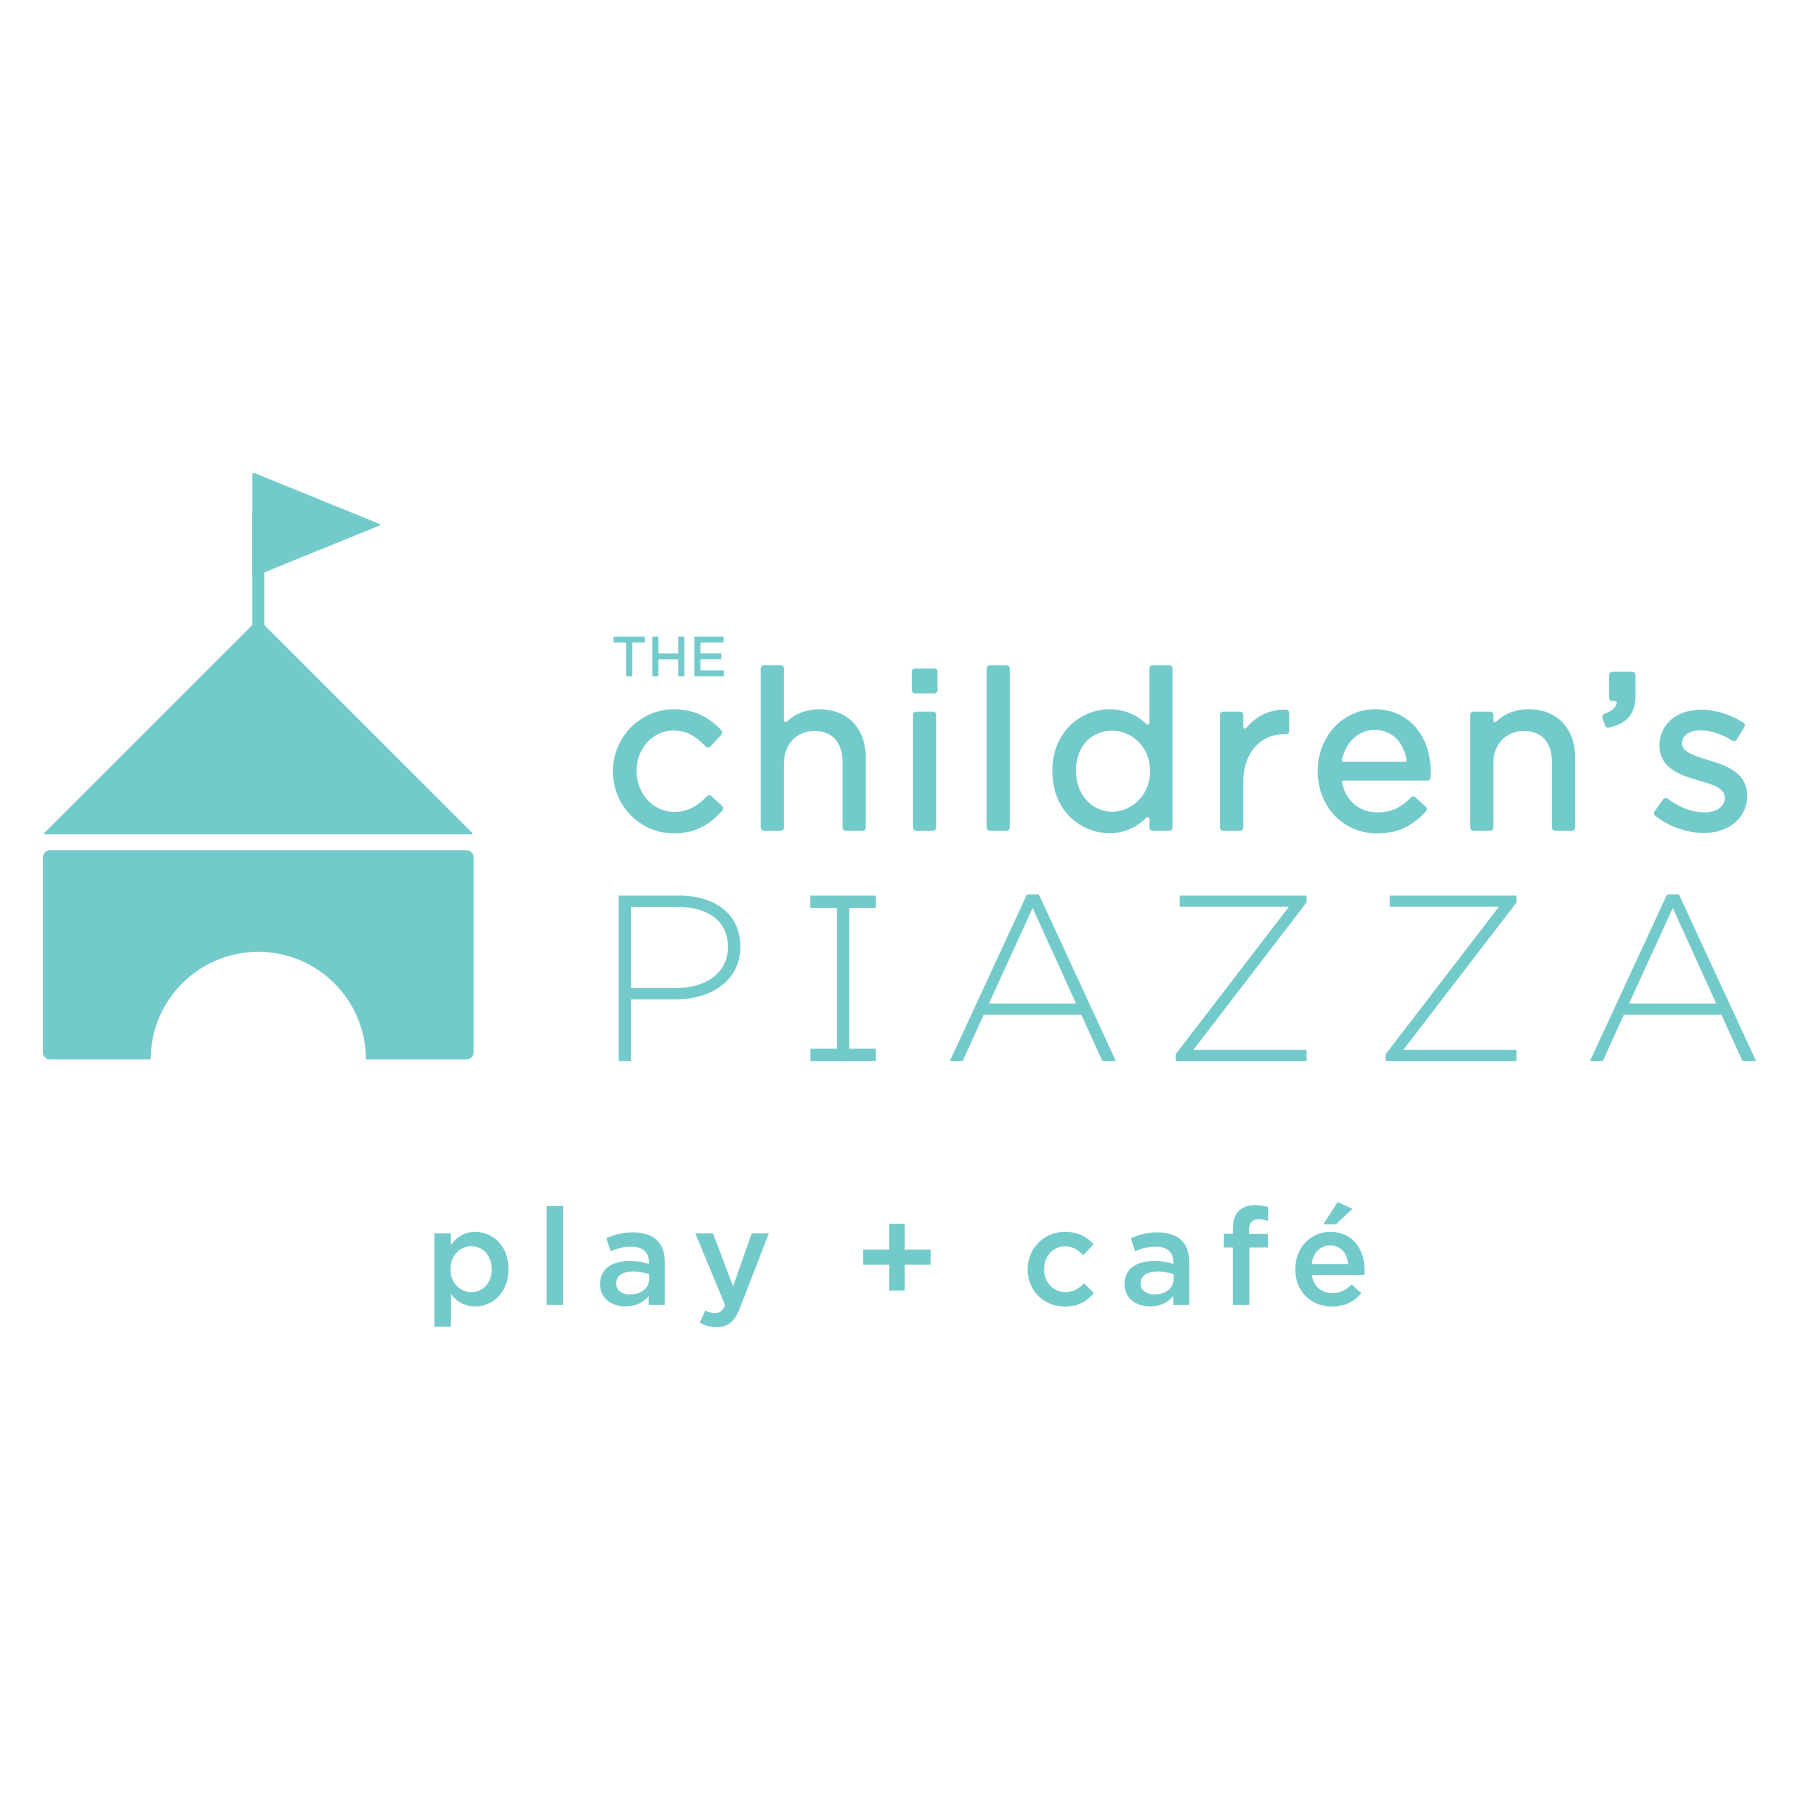 The Children's Piazza